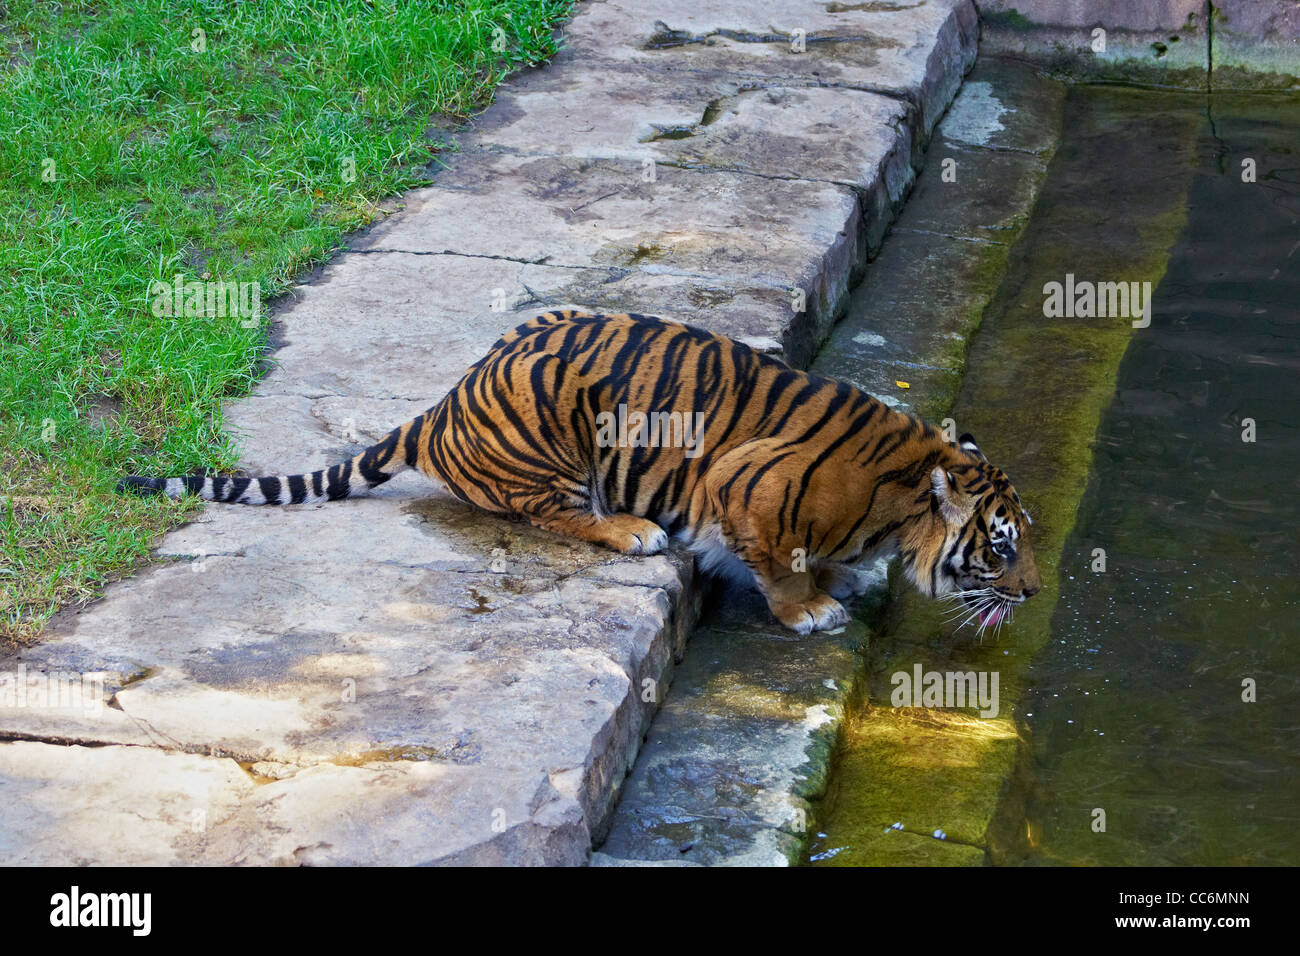 tiger drinking,captive, tigre bebiendo Stock Photo